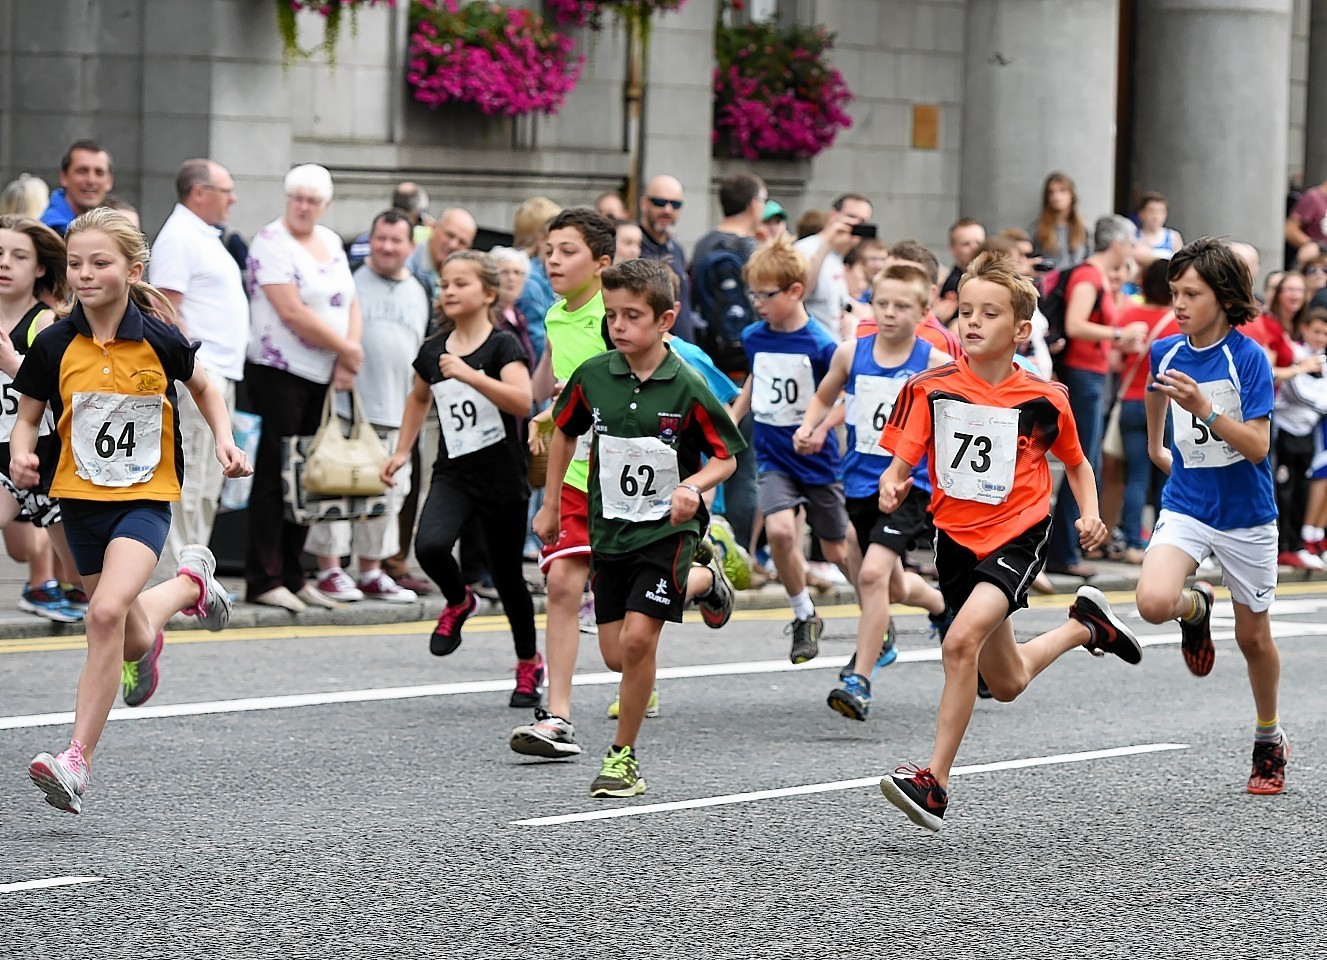 The Union Street Mile race kicks off Celebrate Aberdeen